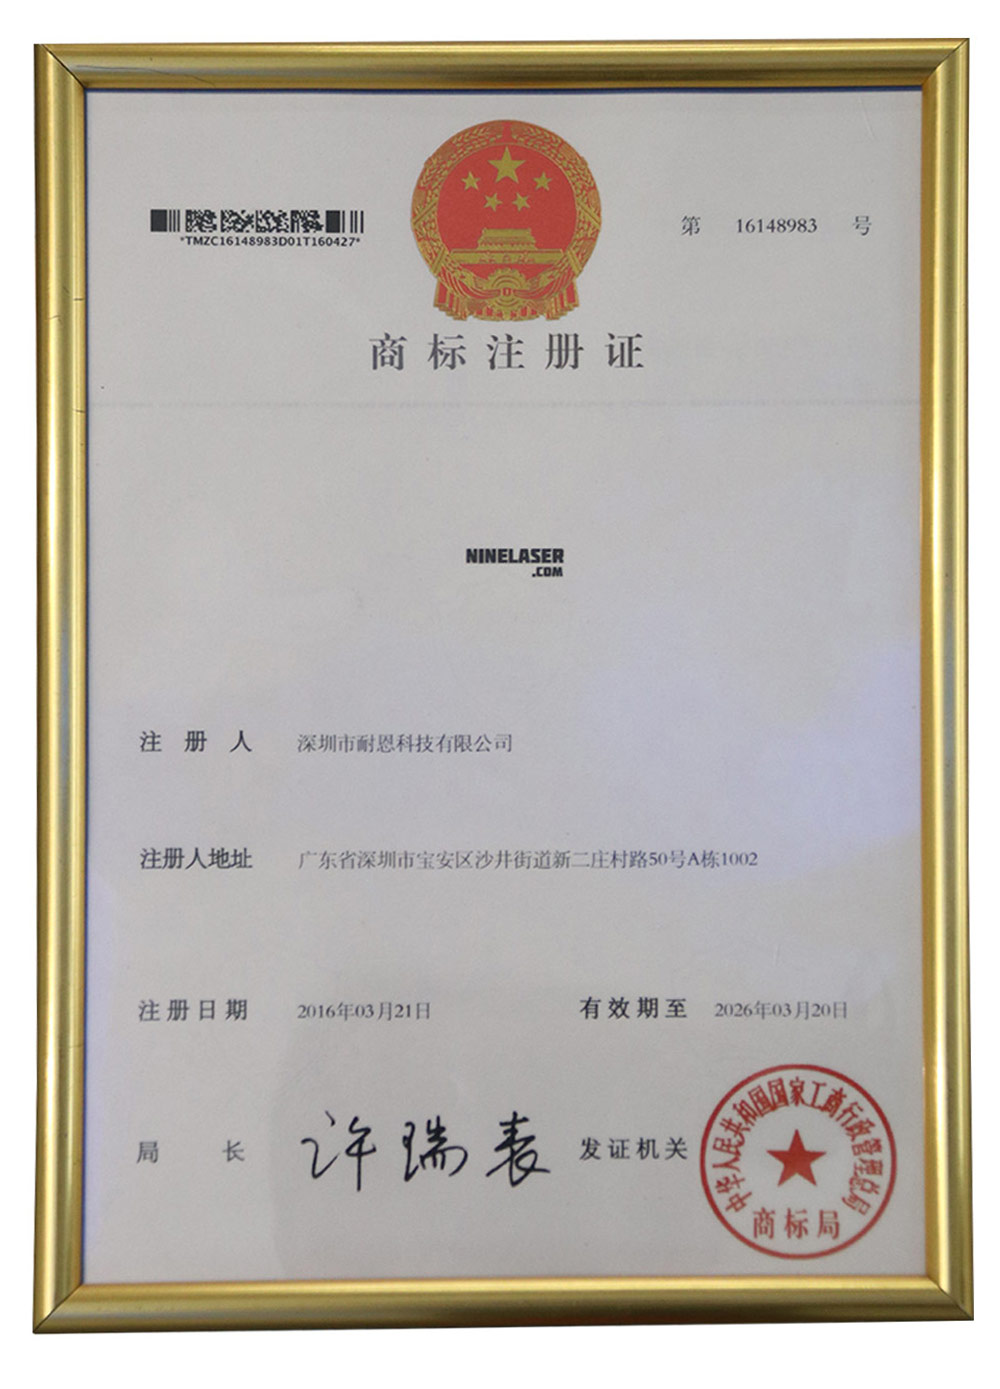 English trademark registration certificate